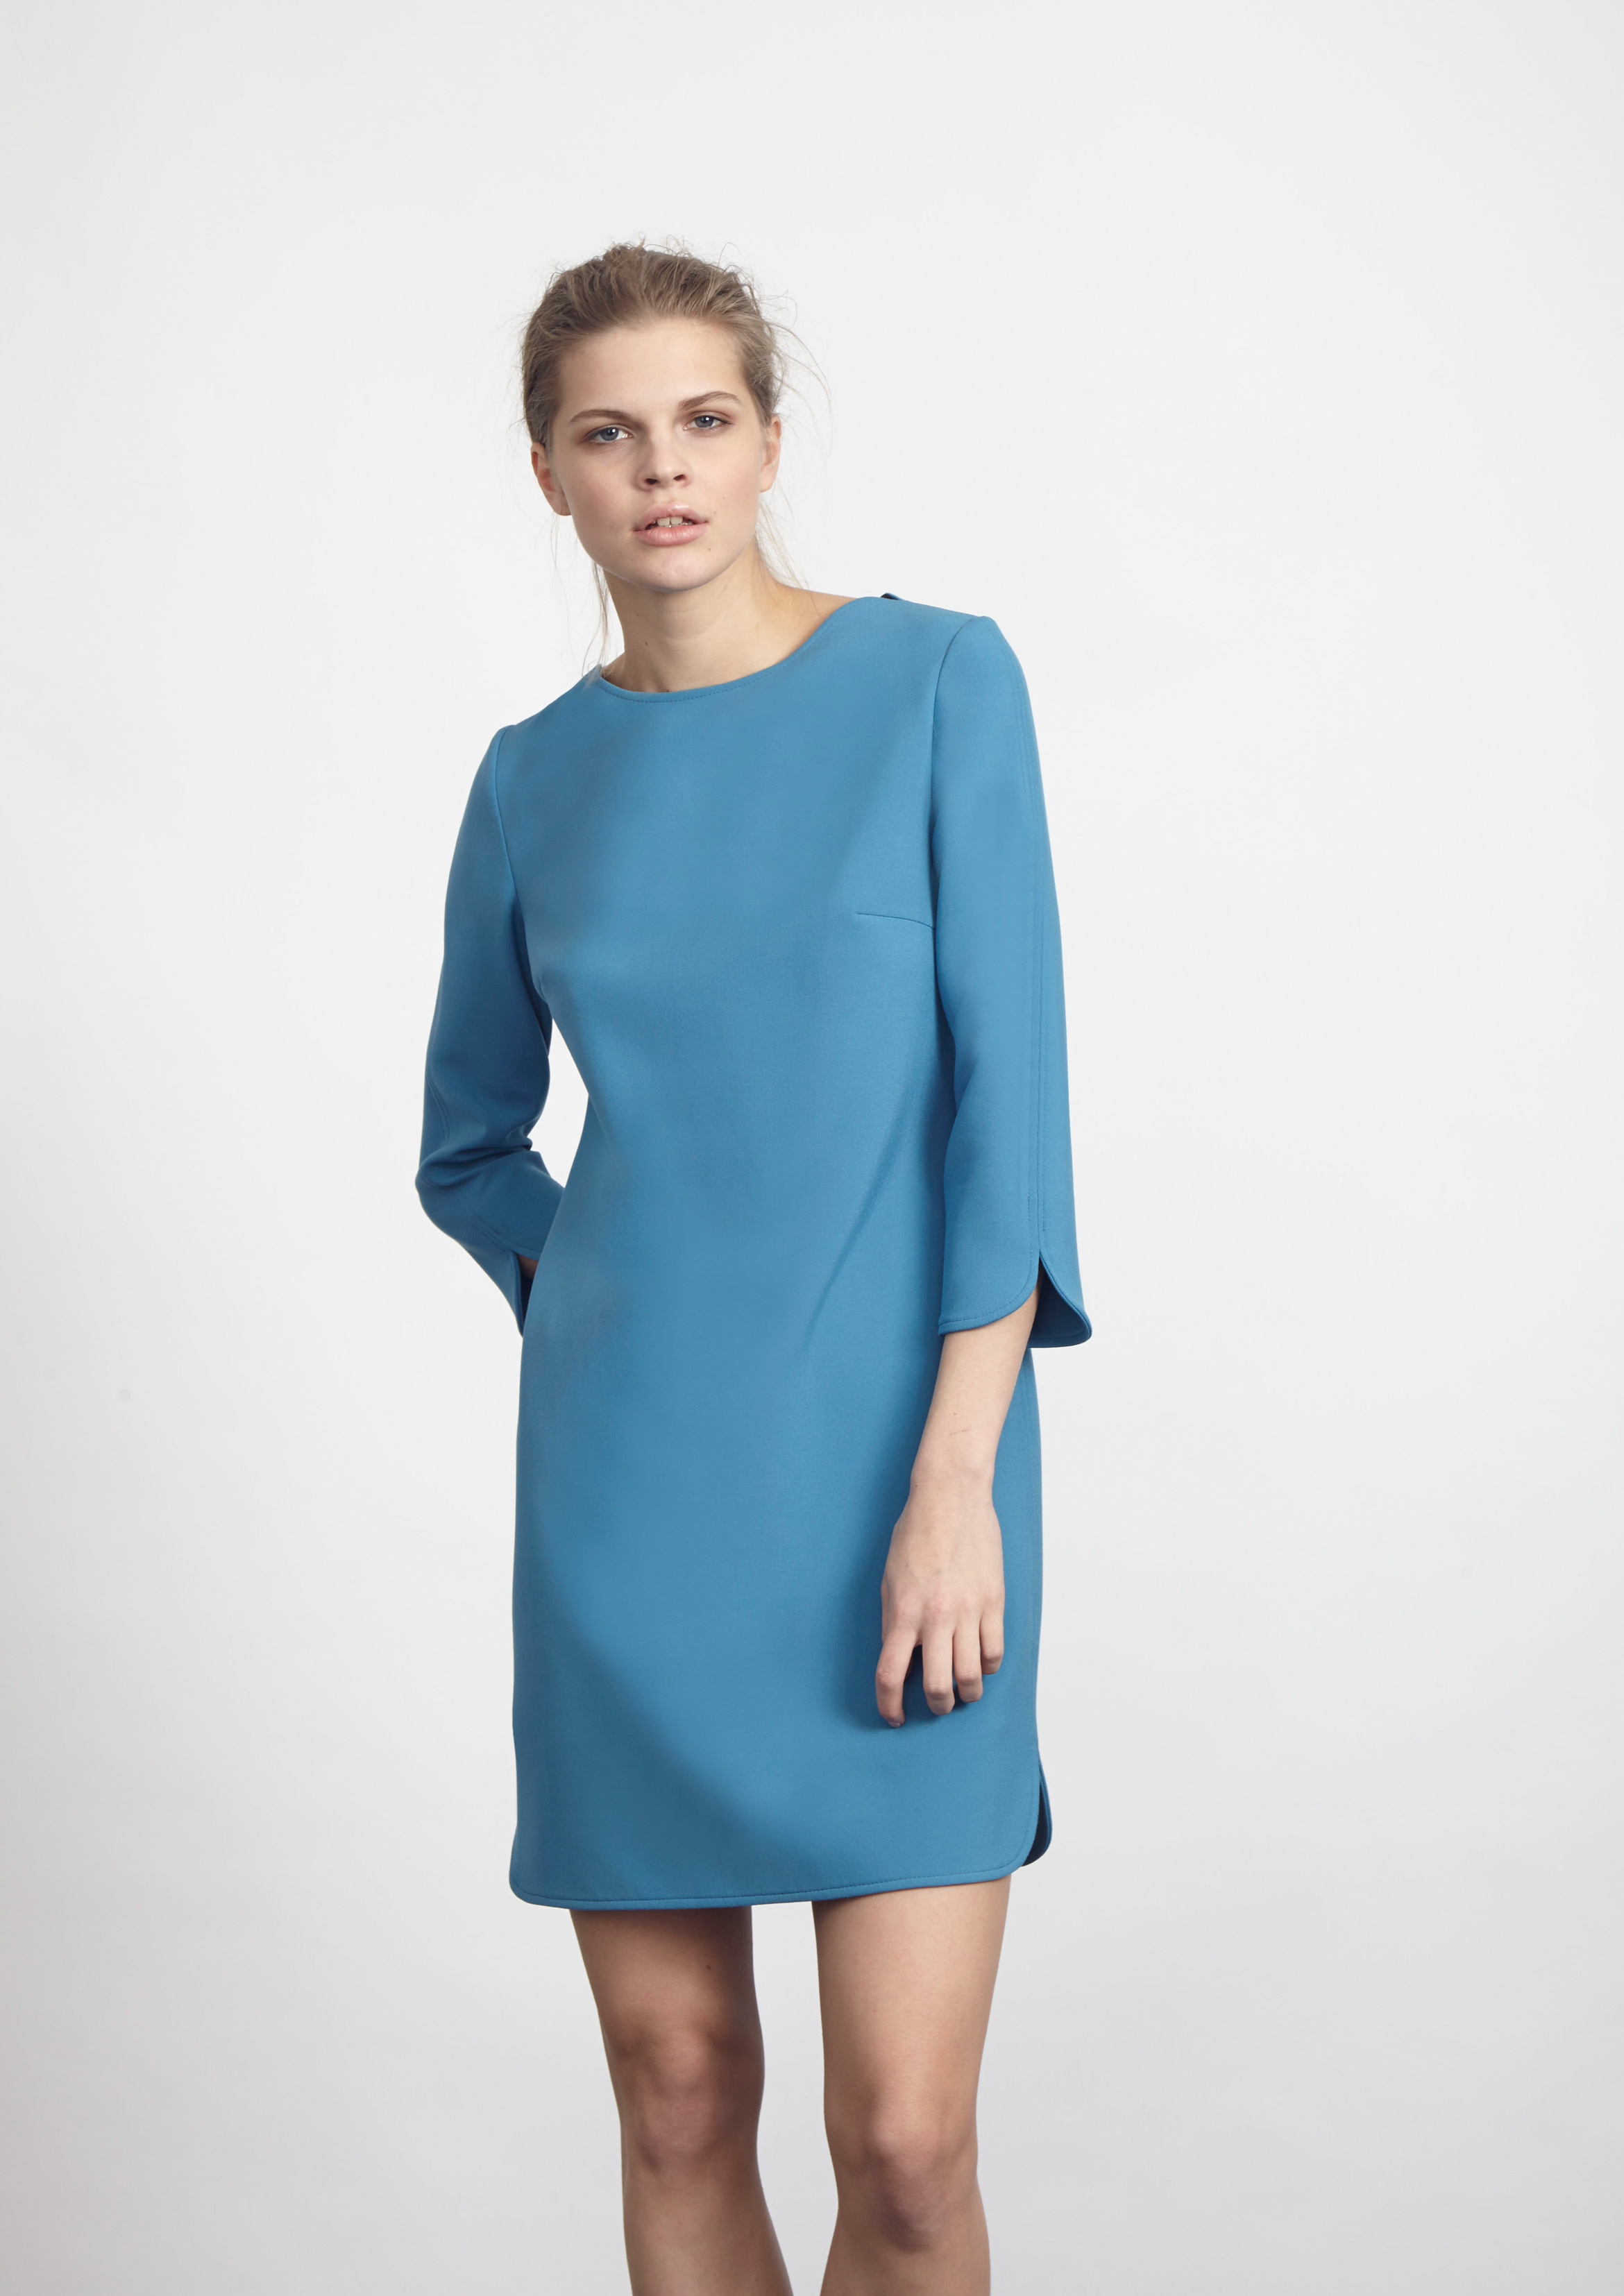 Semi-fitted dress in blue